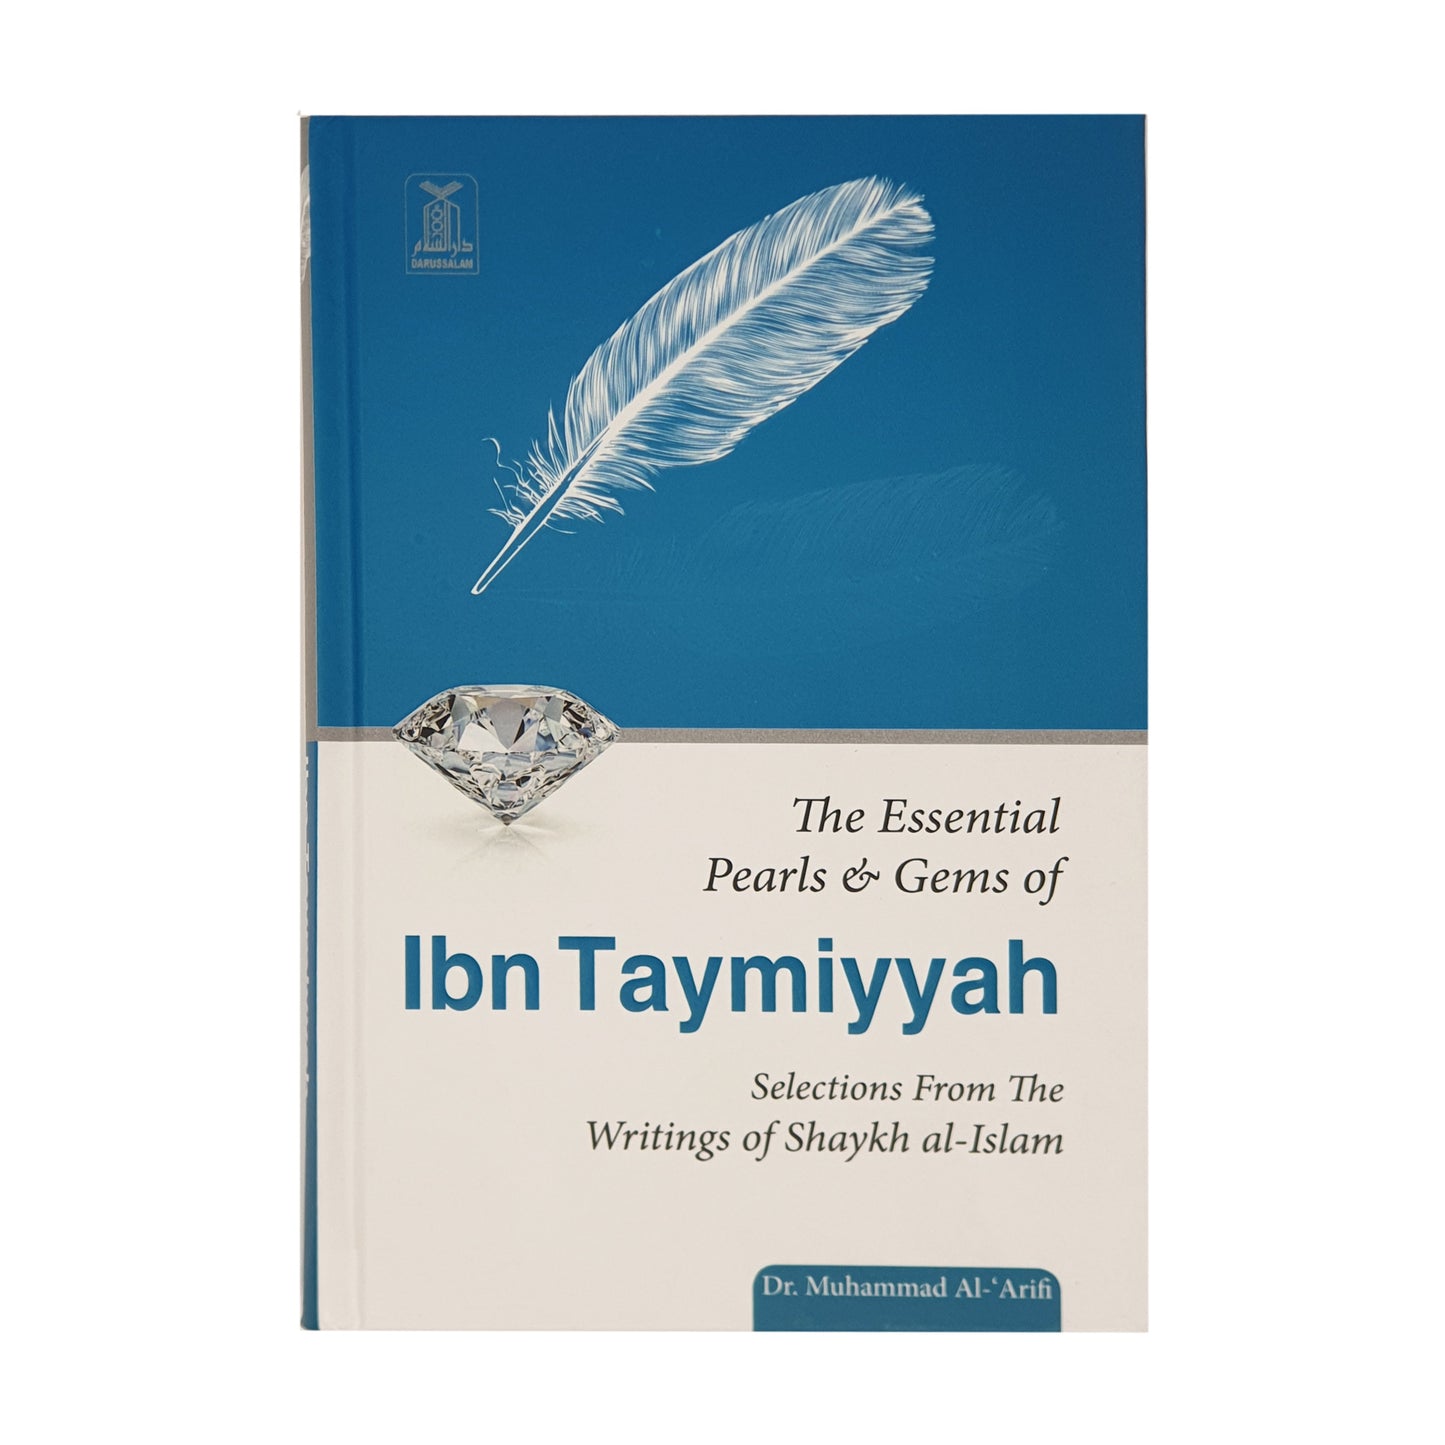 The Essential Pearls & Gems of Ibn Taymiyyah